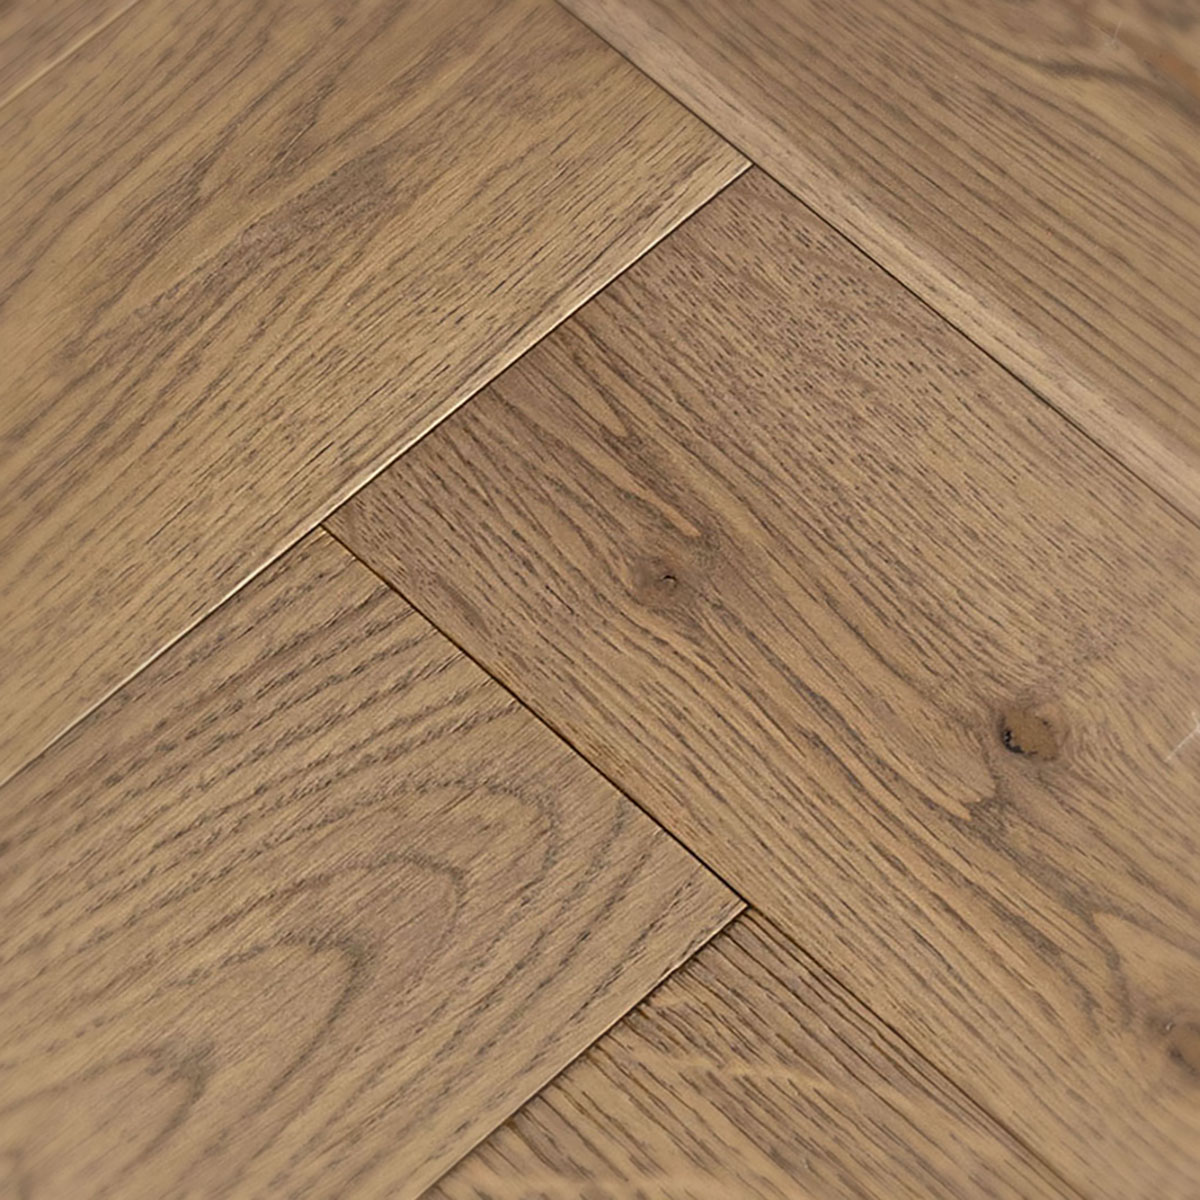 Winsland Lane - Brushed Oiled Herringbone Wood Floor 